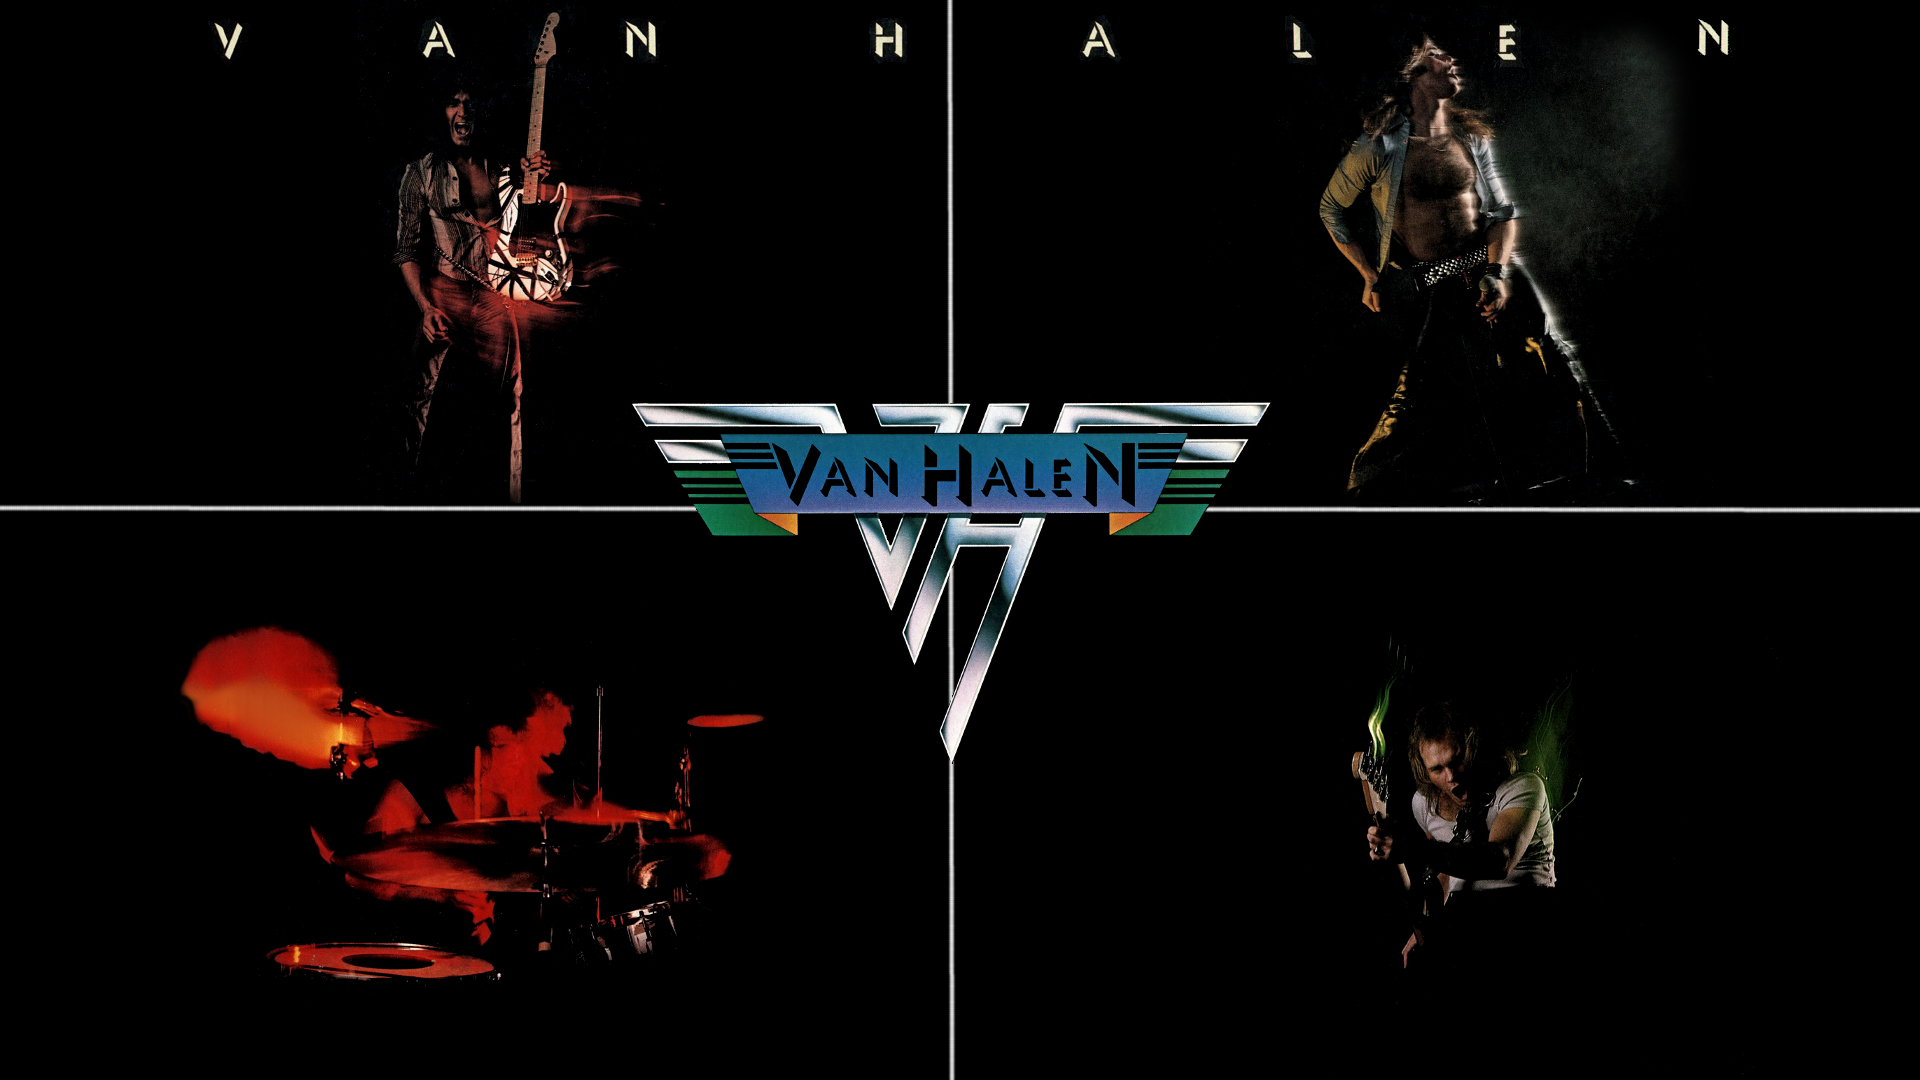 Featured image of post Eddie Van Halen Wallpaper Iphone We determined that these pictures can also depict a hard rock heavy metal van halen